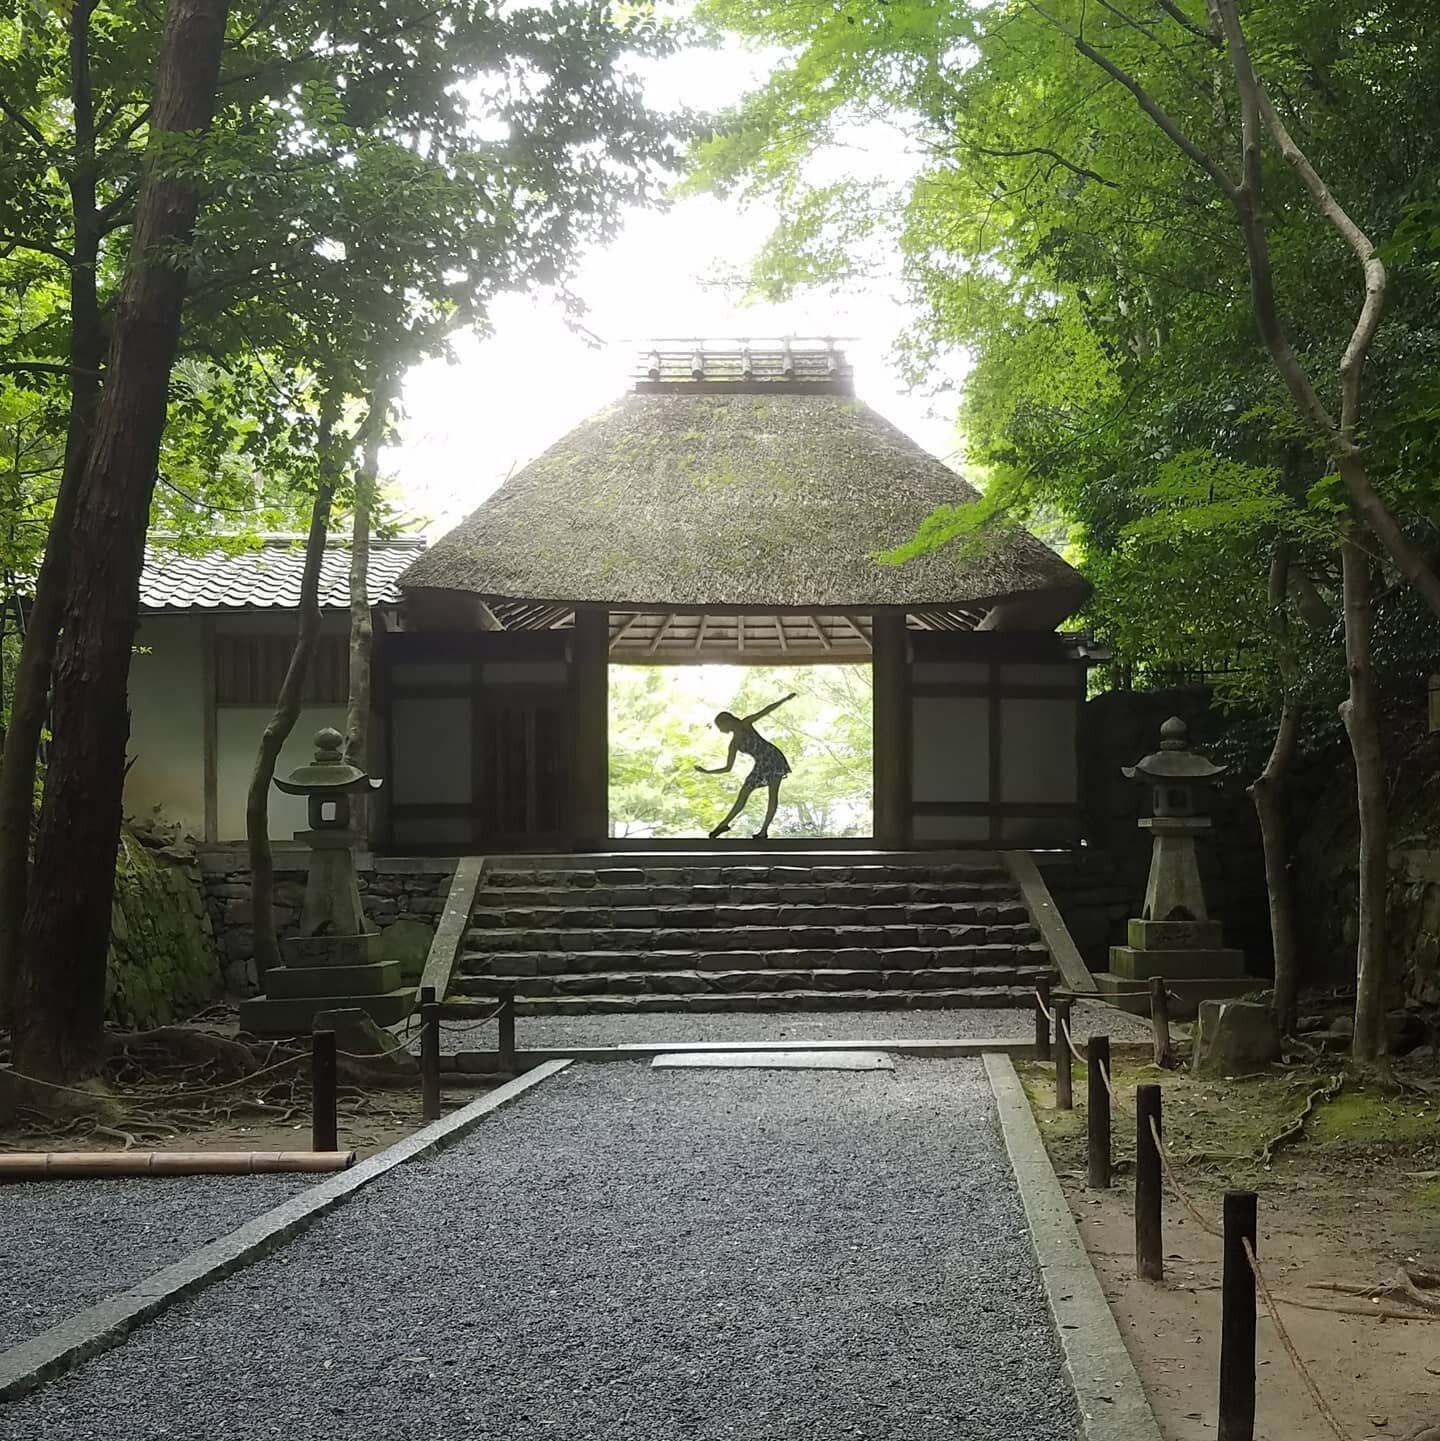 Tucked slightly off the popular Philosopher's Path, the Hōnen-in temple is a serene retreat.
.
📸 by me
.
.
#kyoto #japan #kyotojapan #japantravel #solotravel #travelgram #wanderlust #dametraveler #visitjapan #gltlove #sheisnotlost #travelphotography